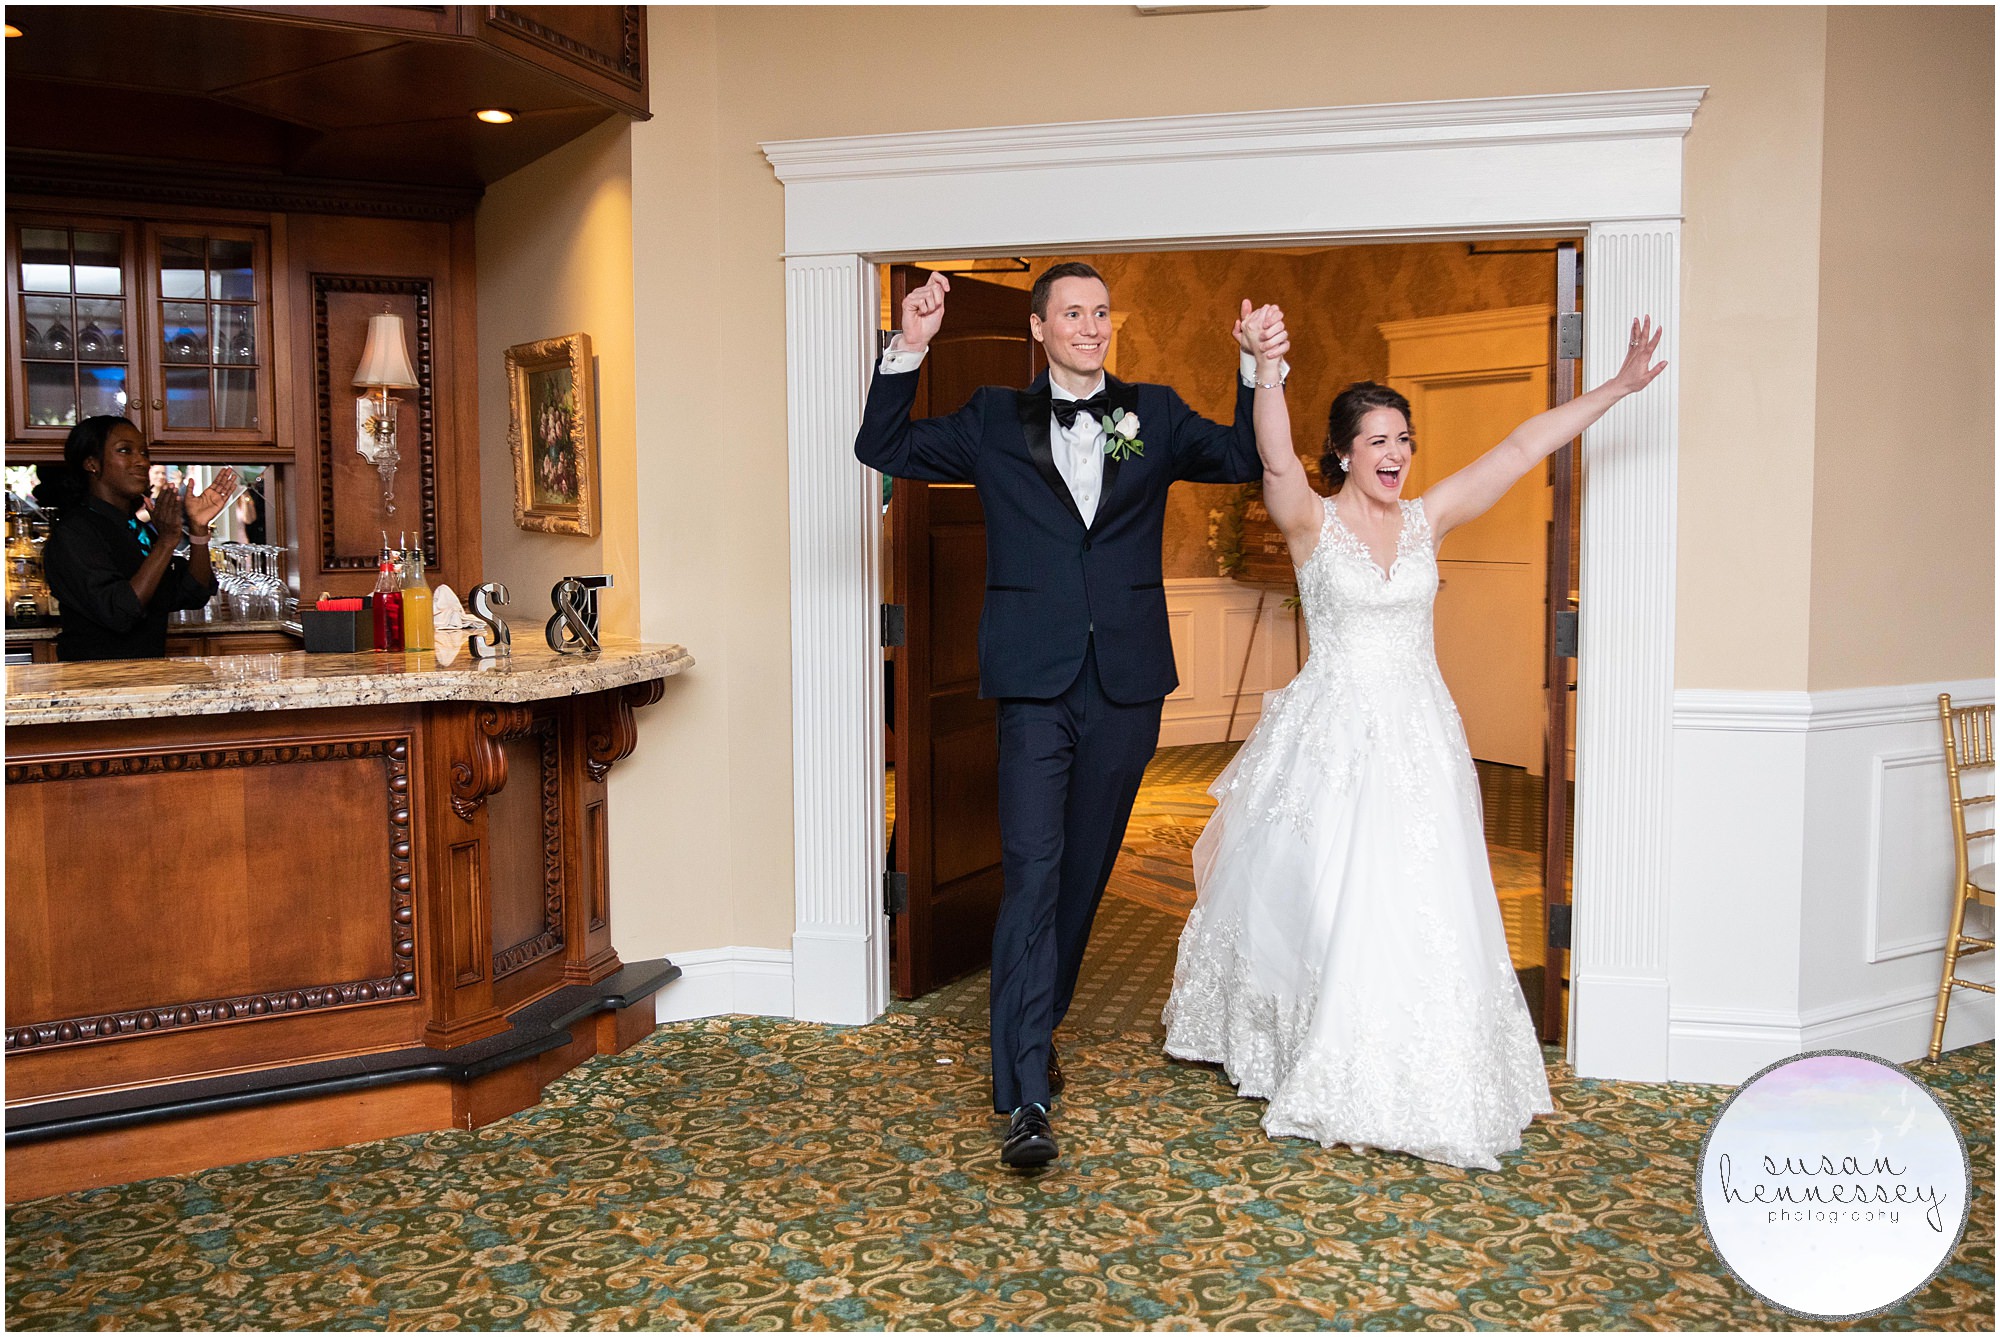 A bride and groom enter their reception